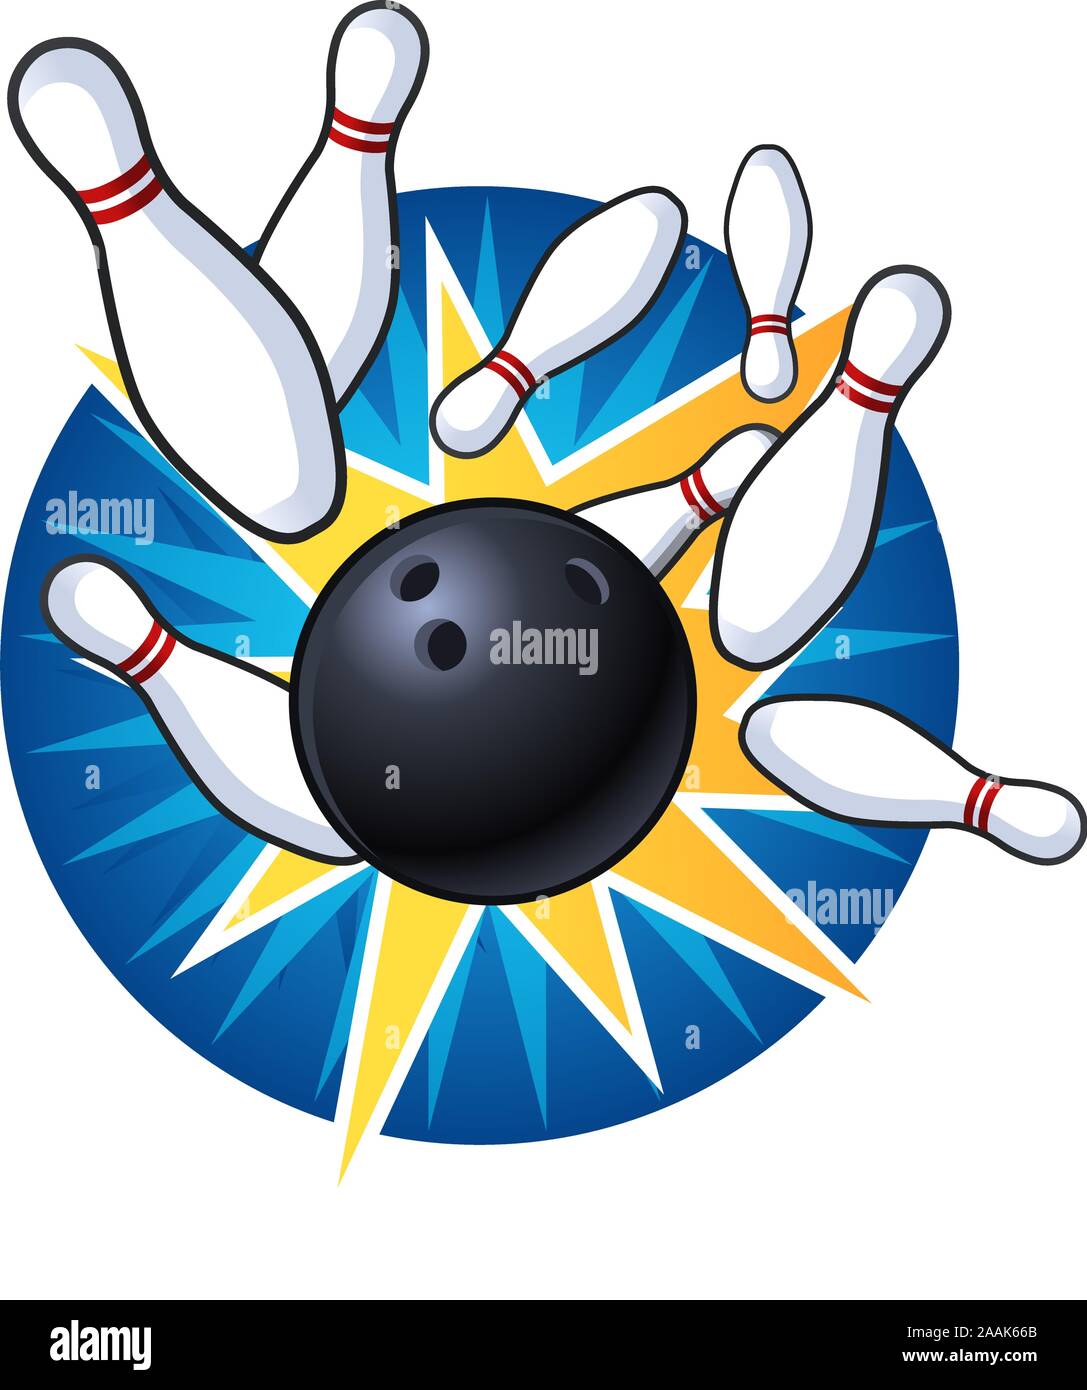 Bowling strike illustration Stock Vector Image & Art - Alamy